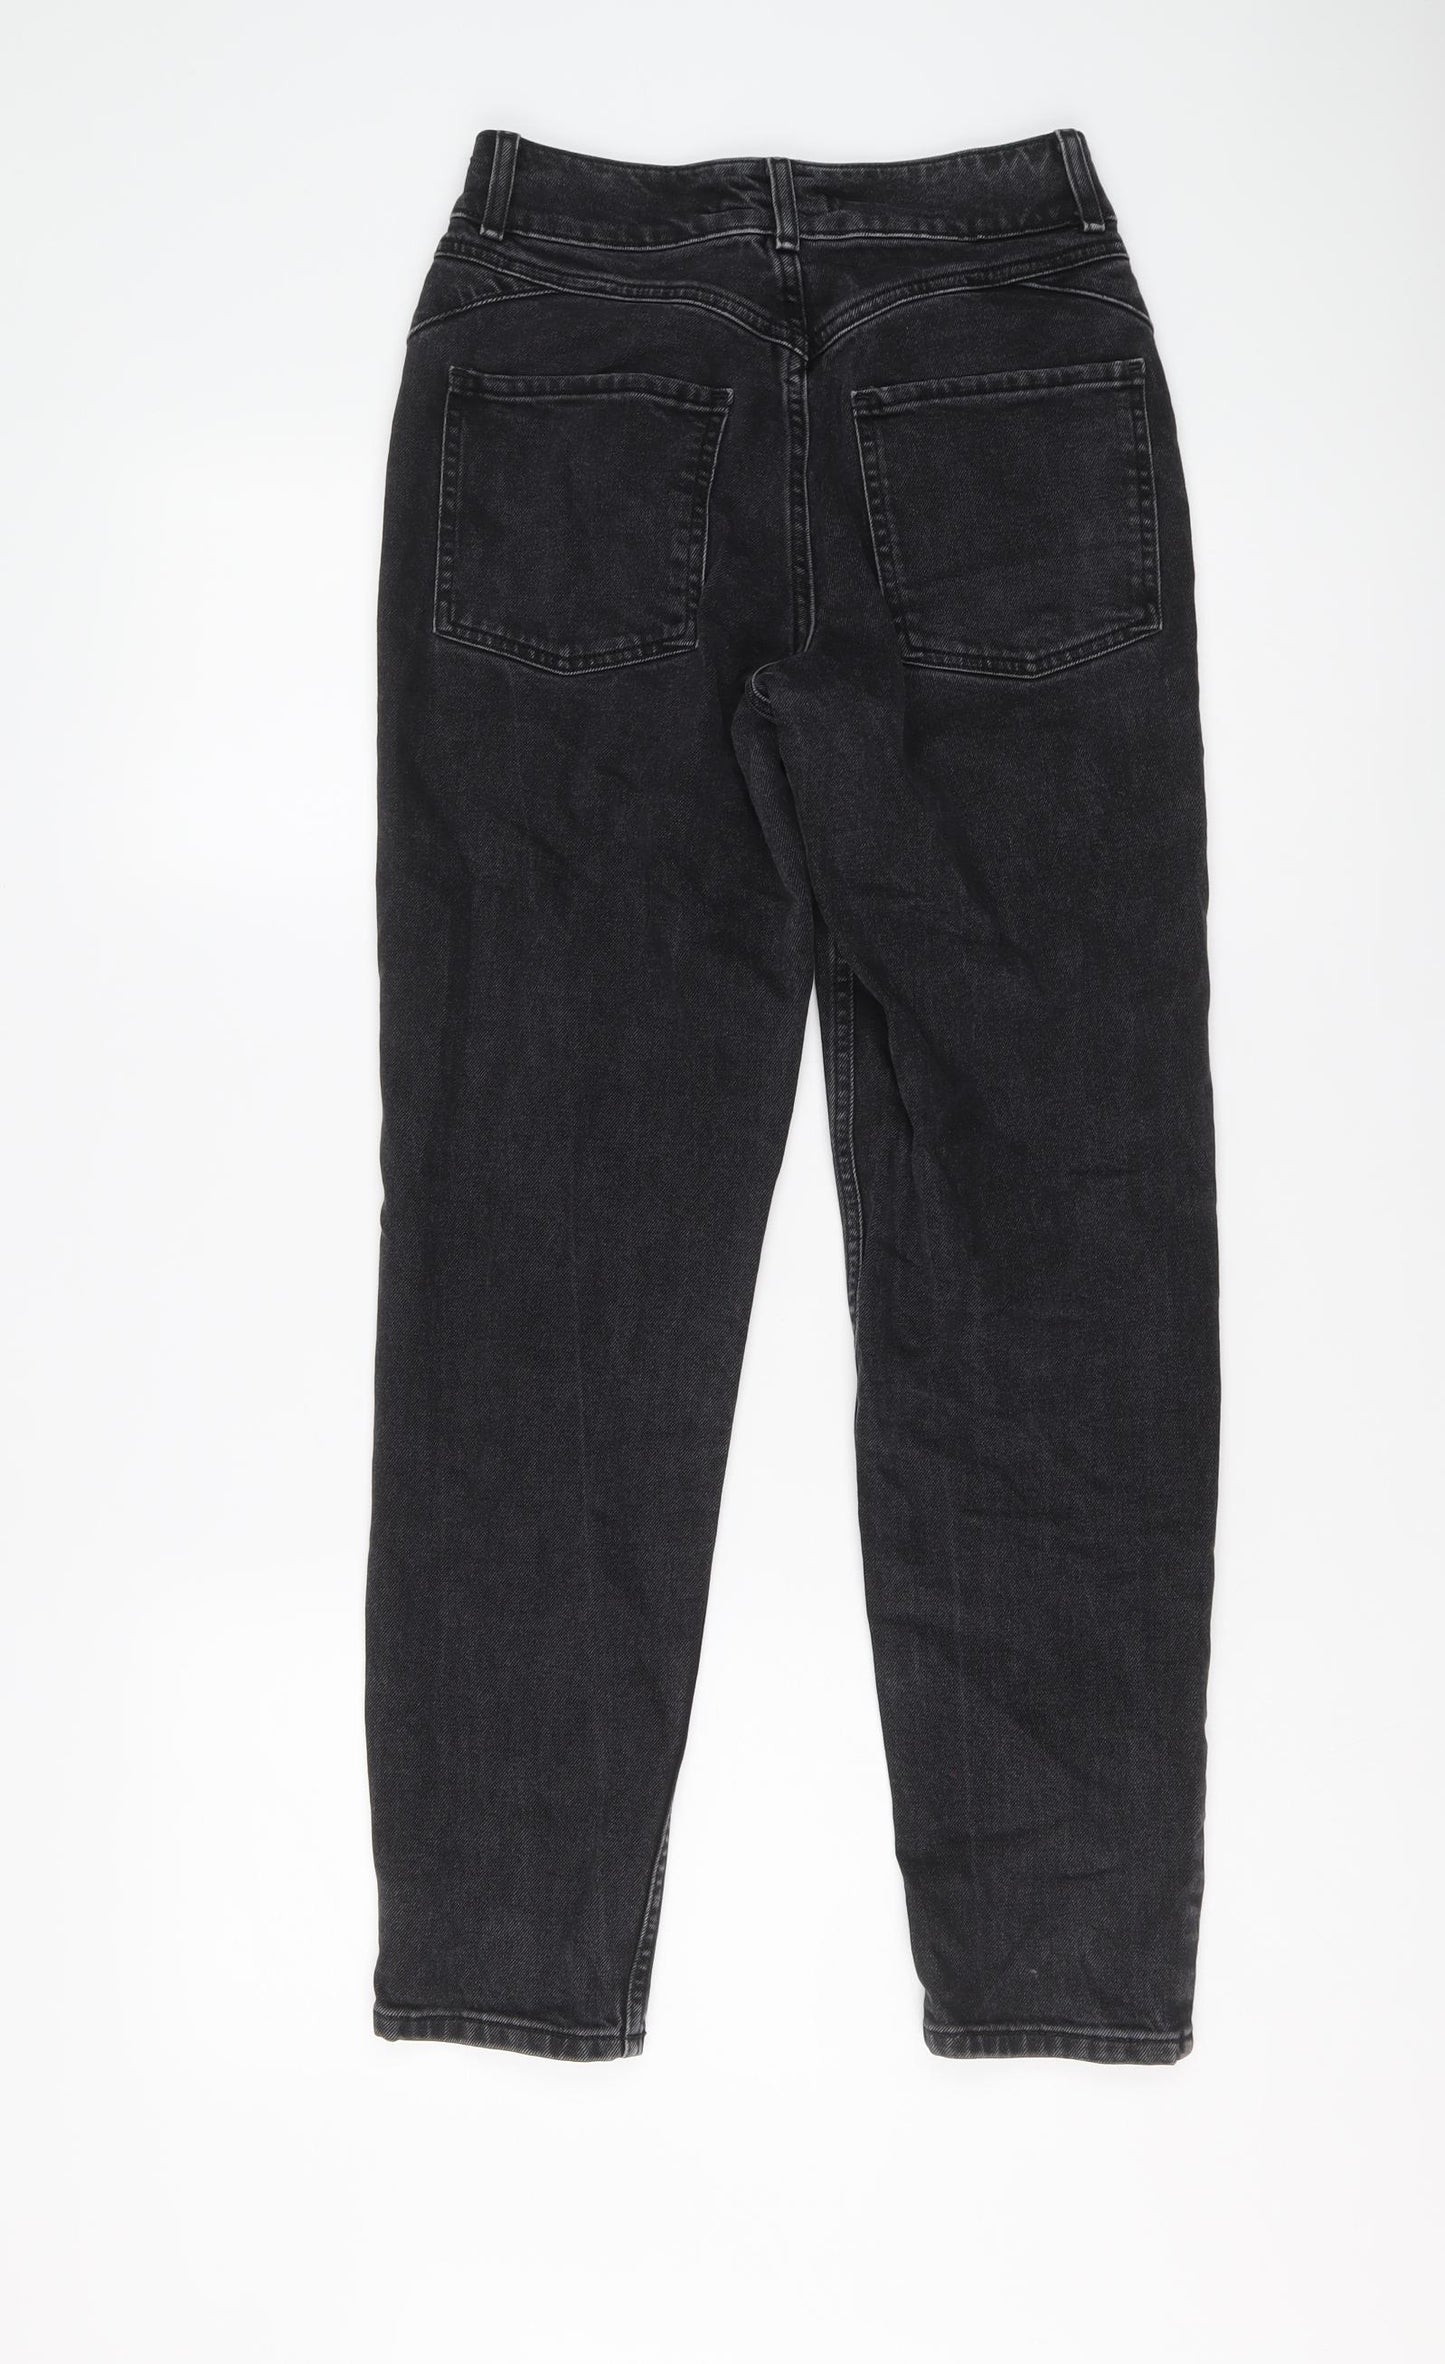 Denim & Co. Womens Black Cotton Skinny Jeans Size 8 L27 in Regular Button